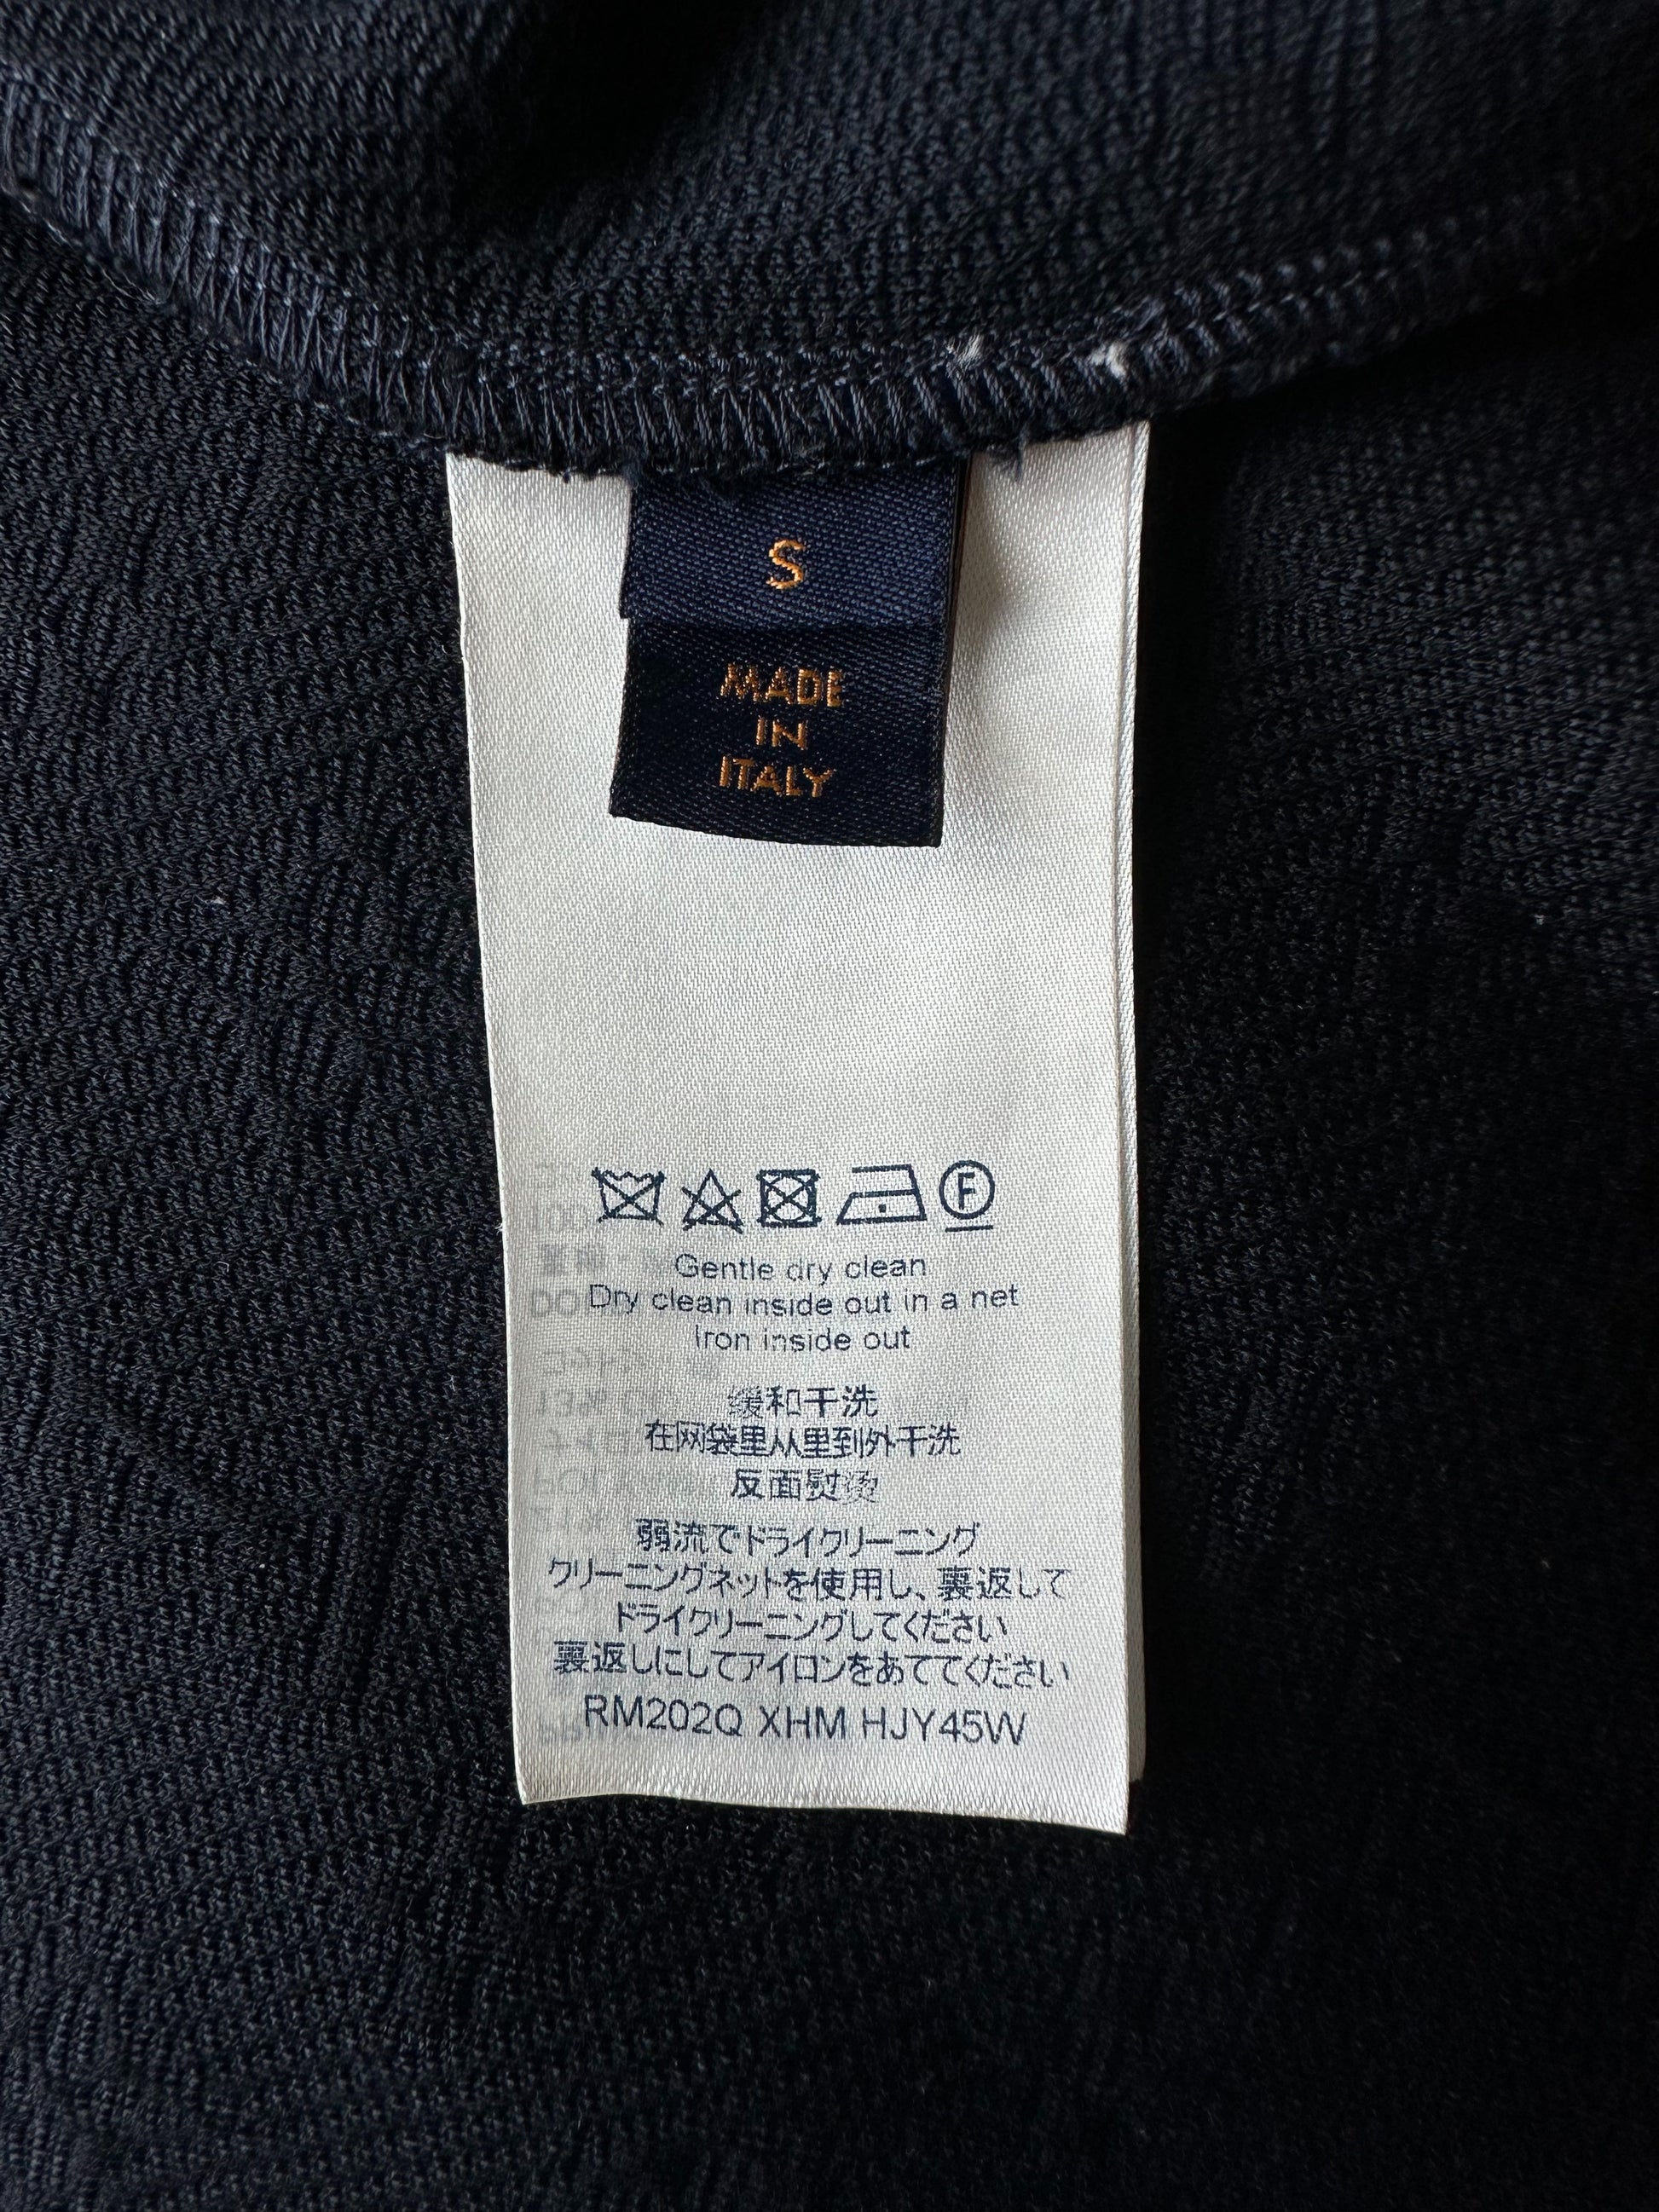 Louis Vuitton Monogram Track Jacket